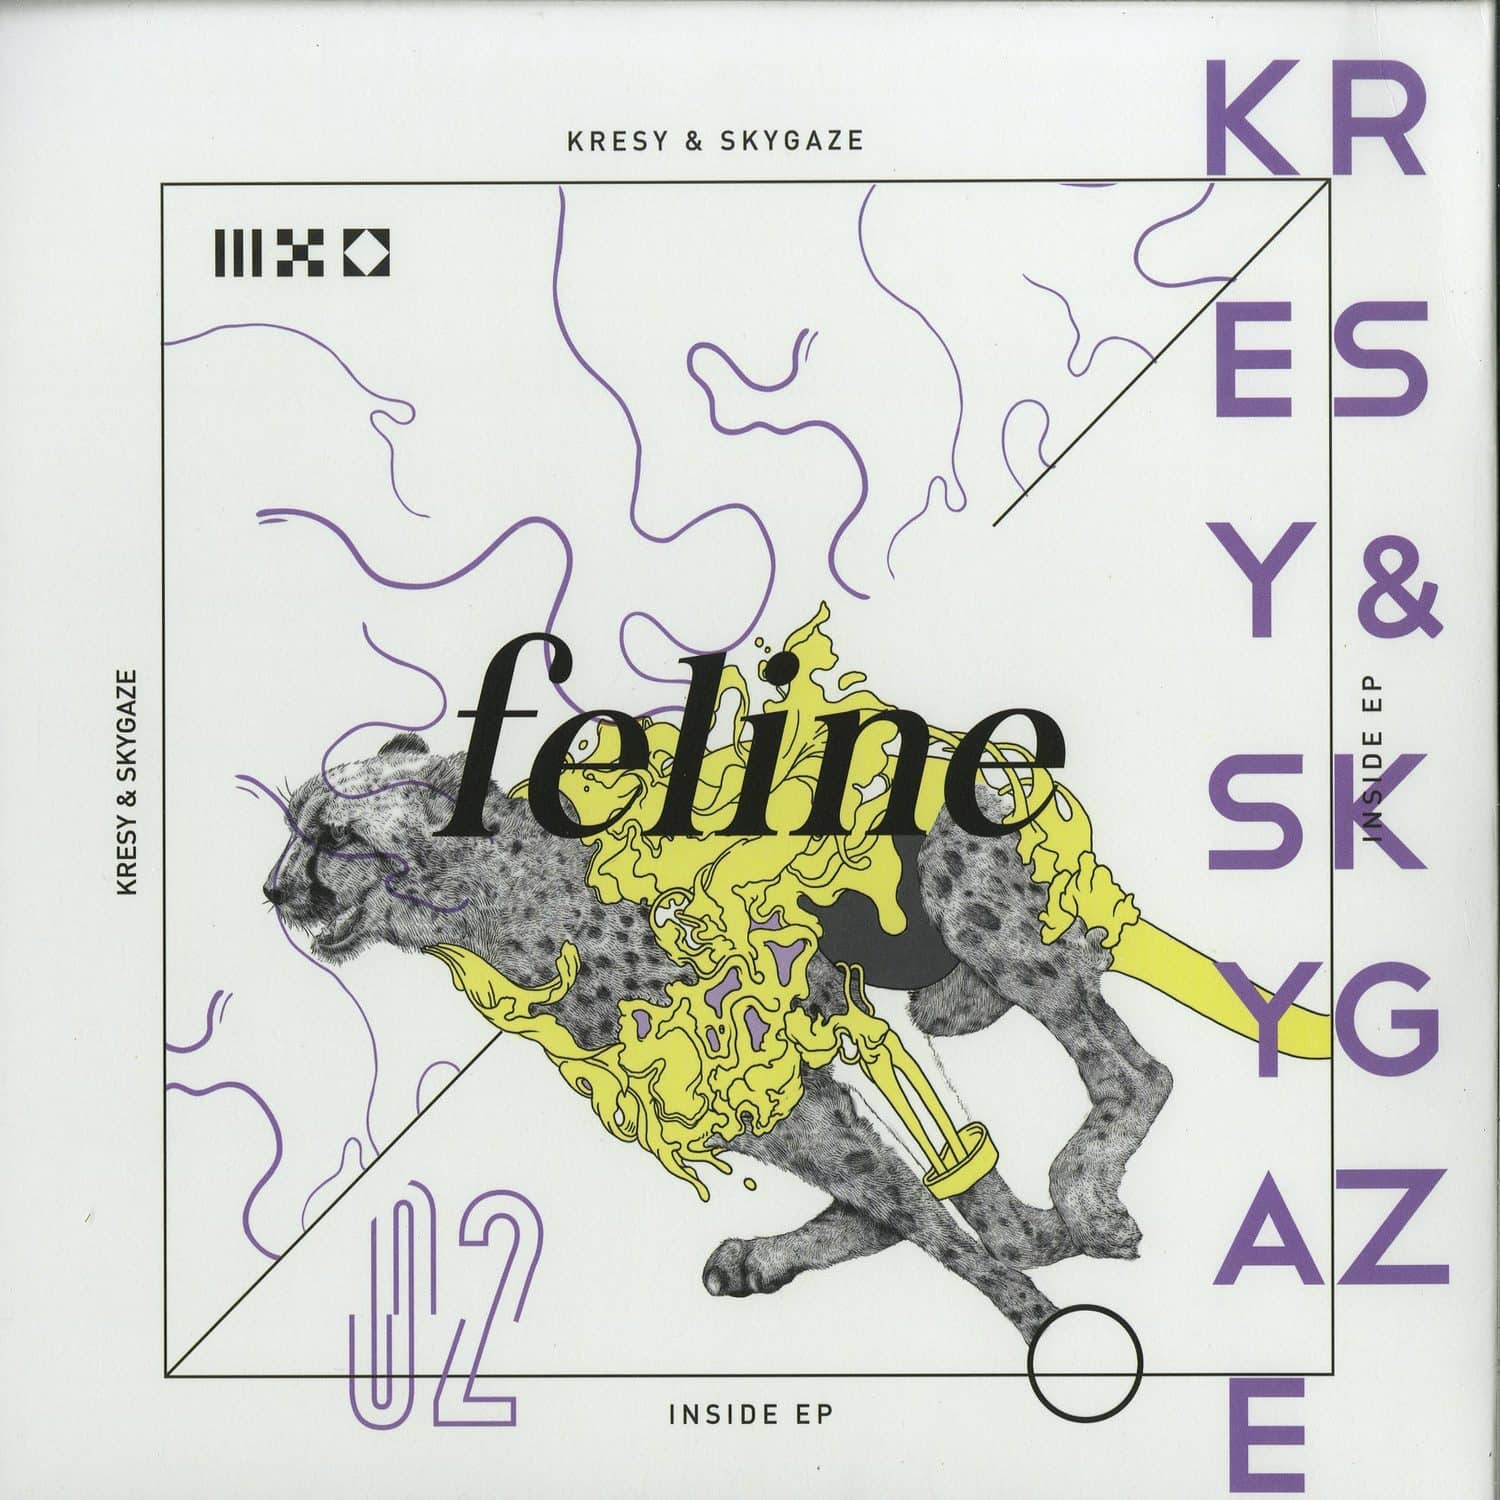 Kresy & Skygaze - INSIDE EP